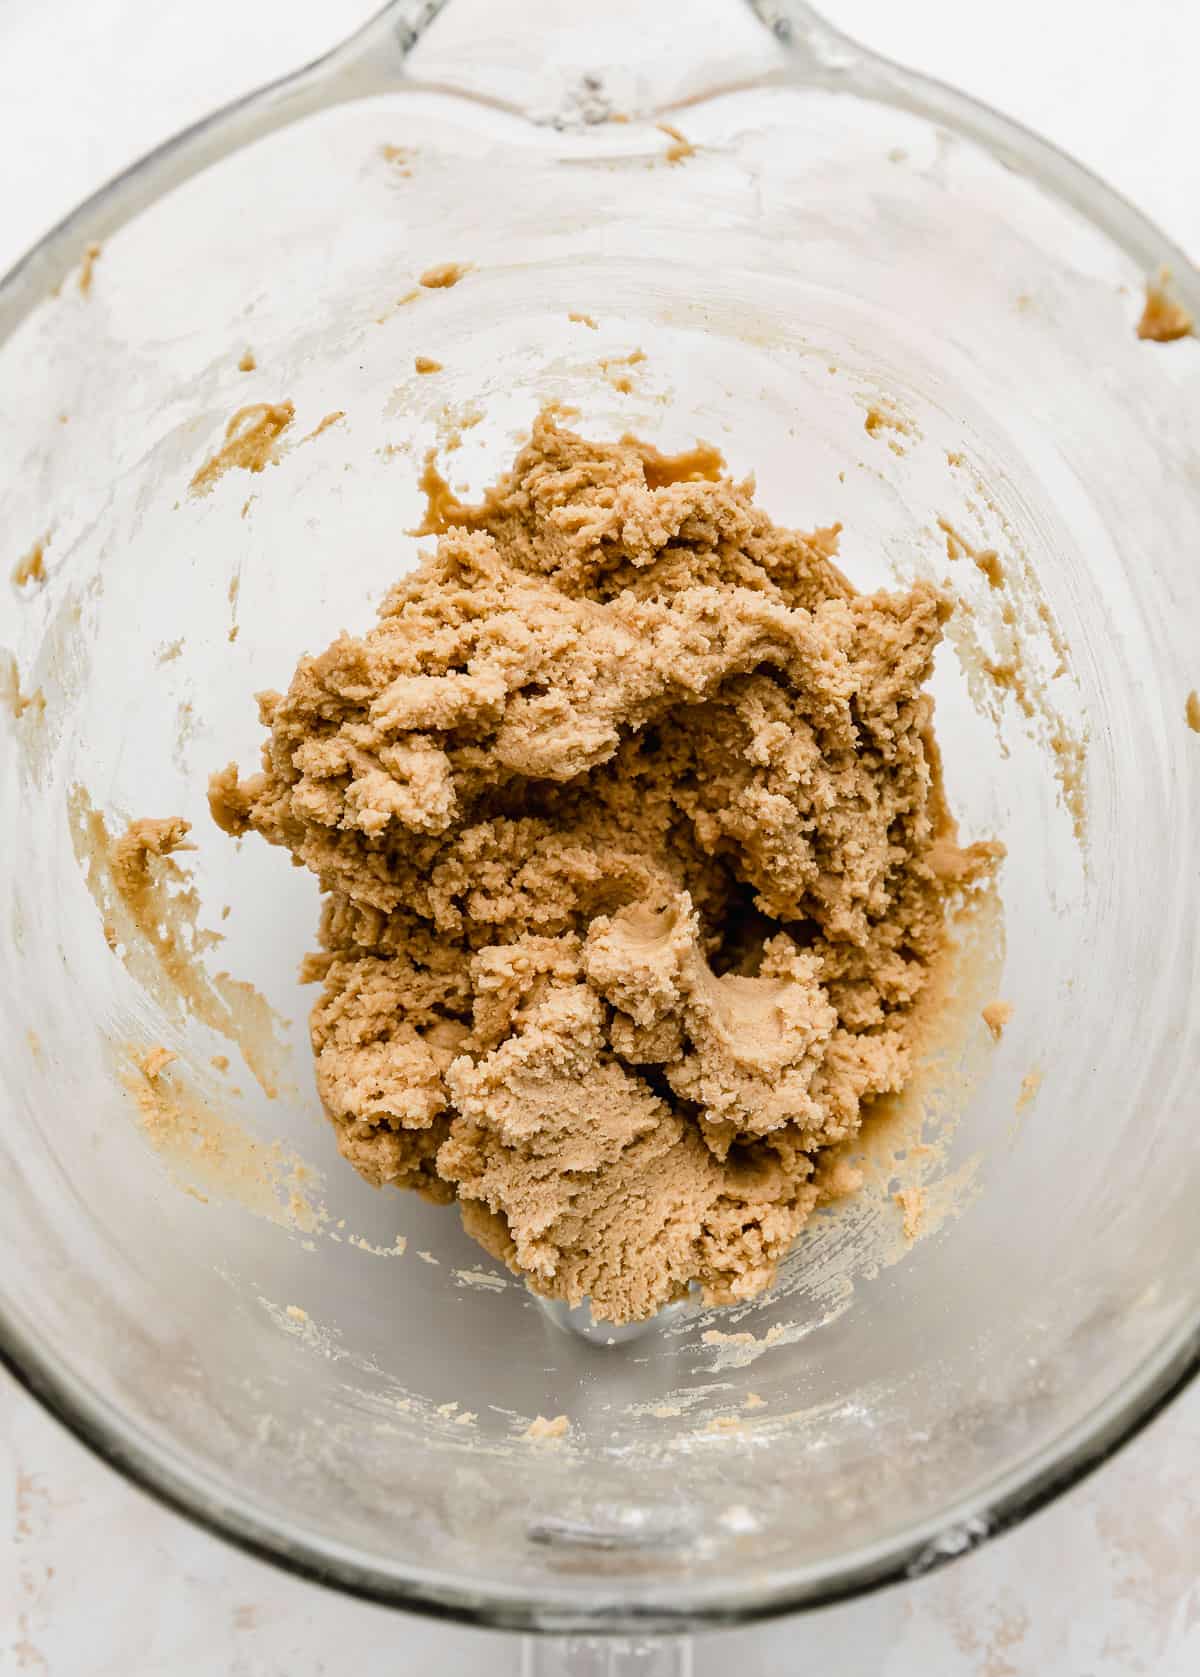 A close up photo of Crumbl Classic Peanut Butter Cookie dough in a glass bowl.